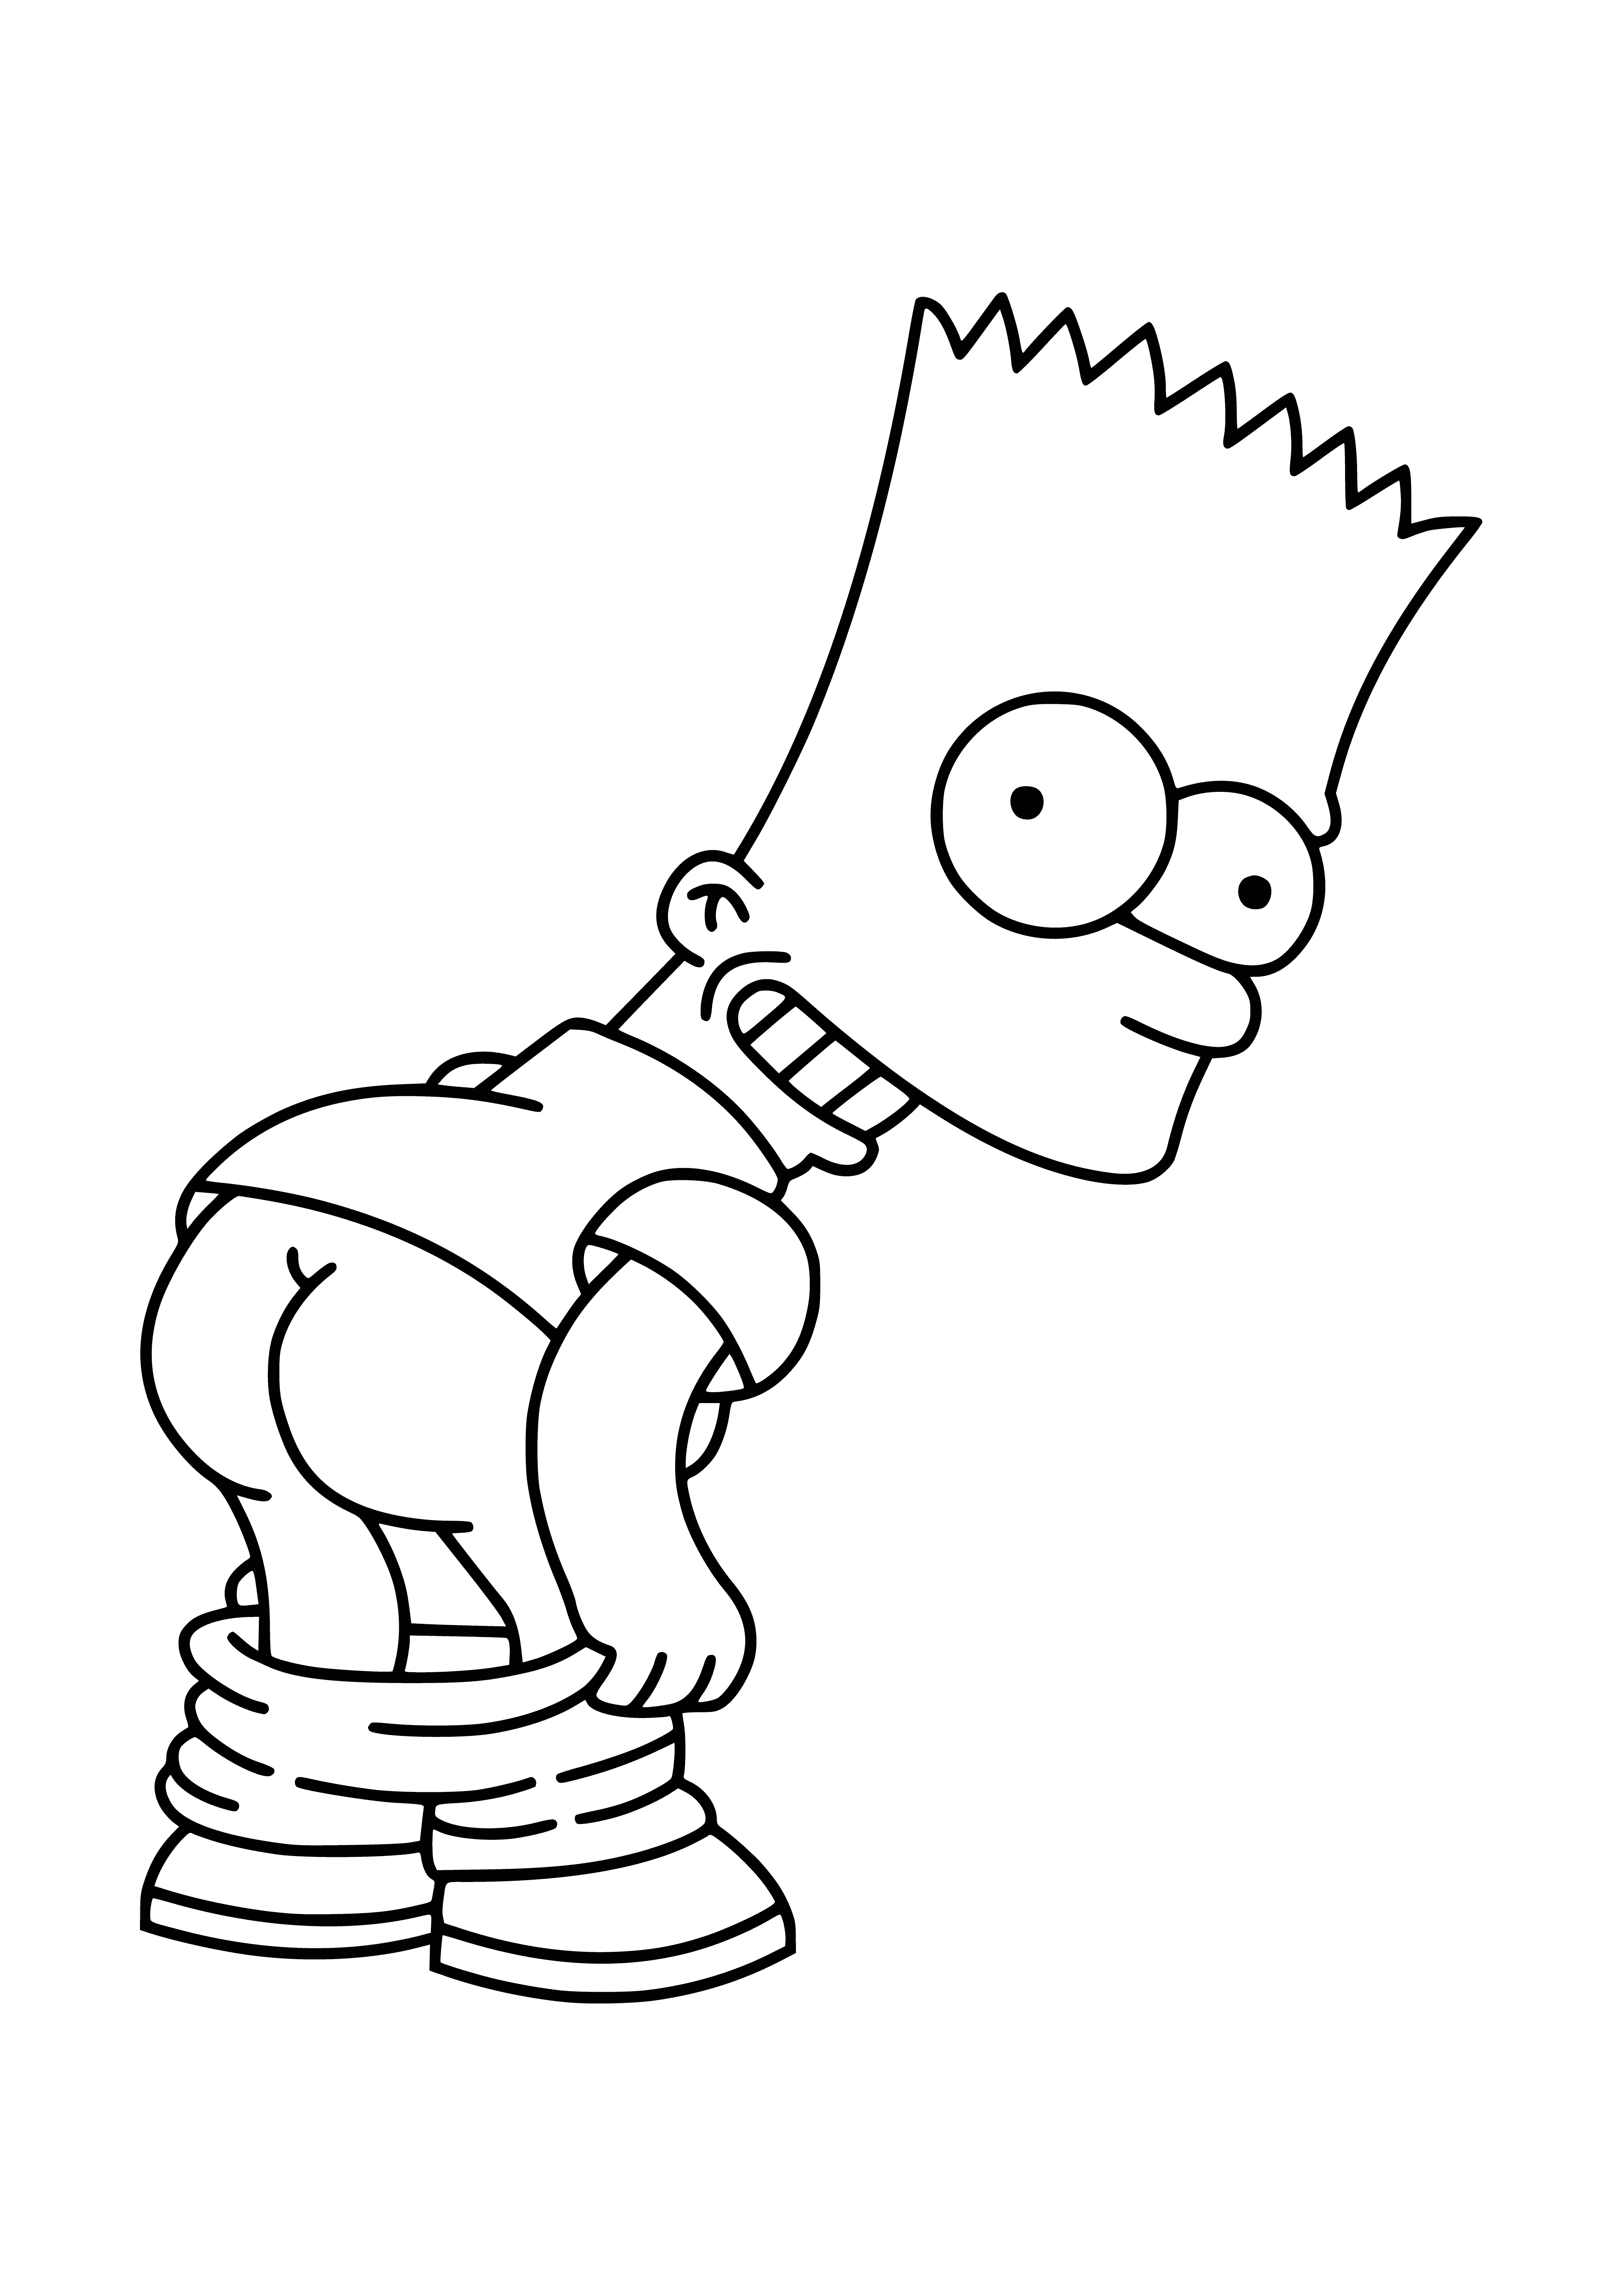 Bart è un teppista pagina da colorare